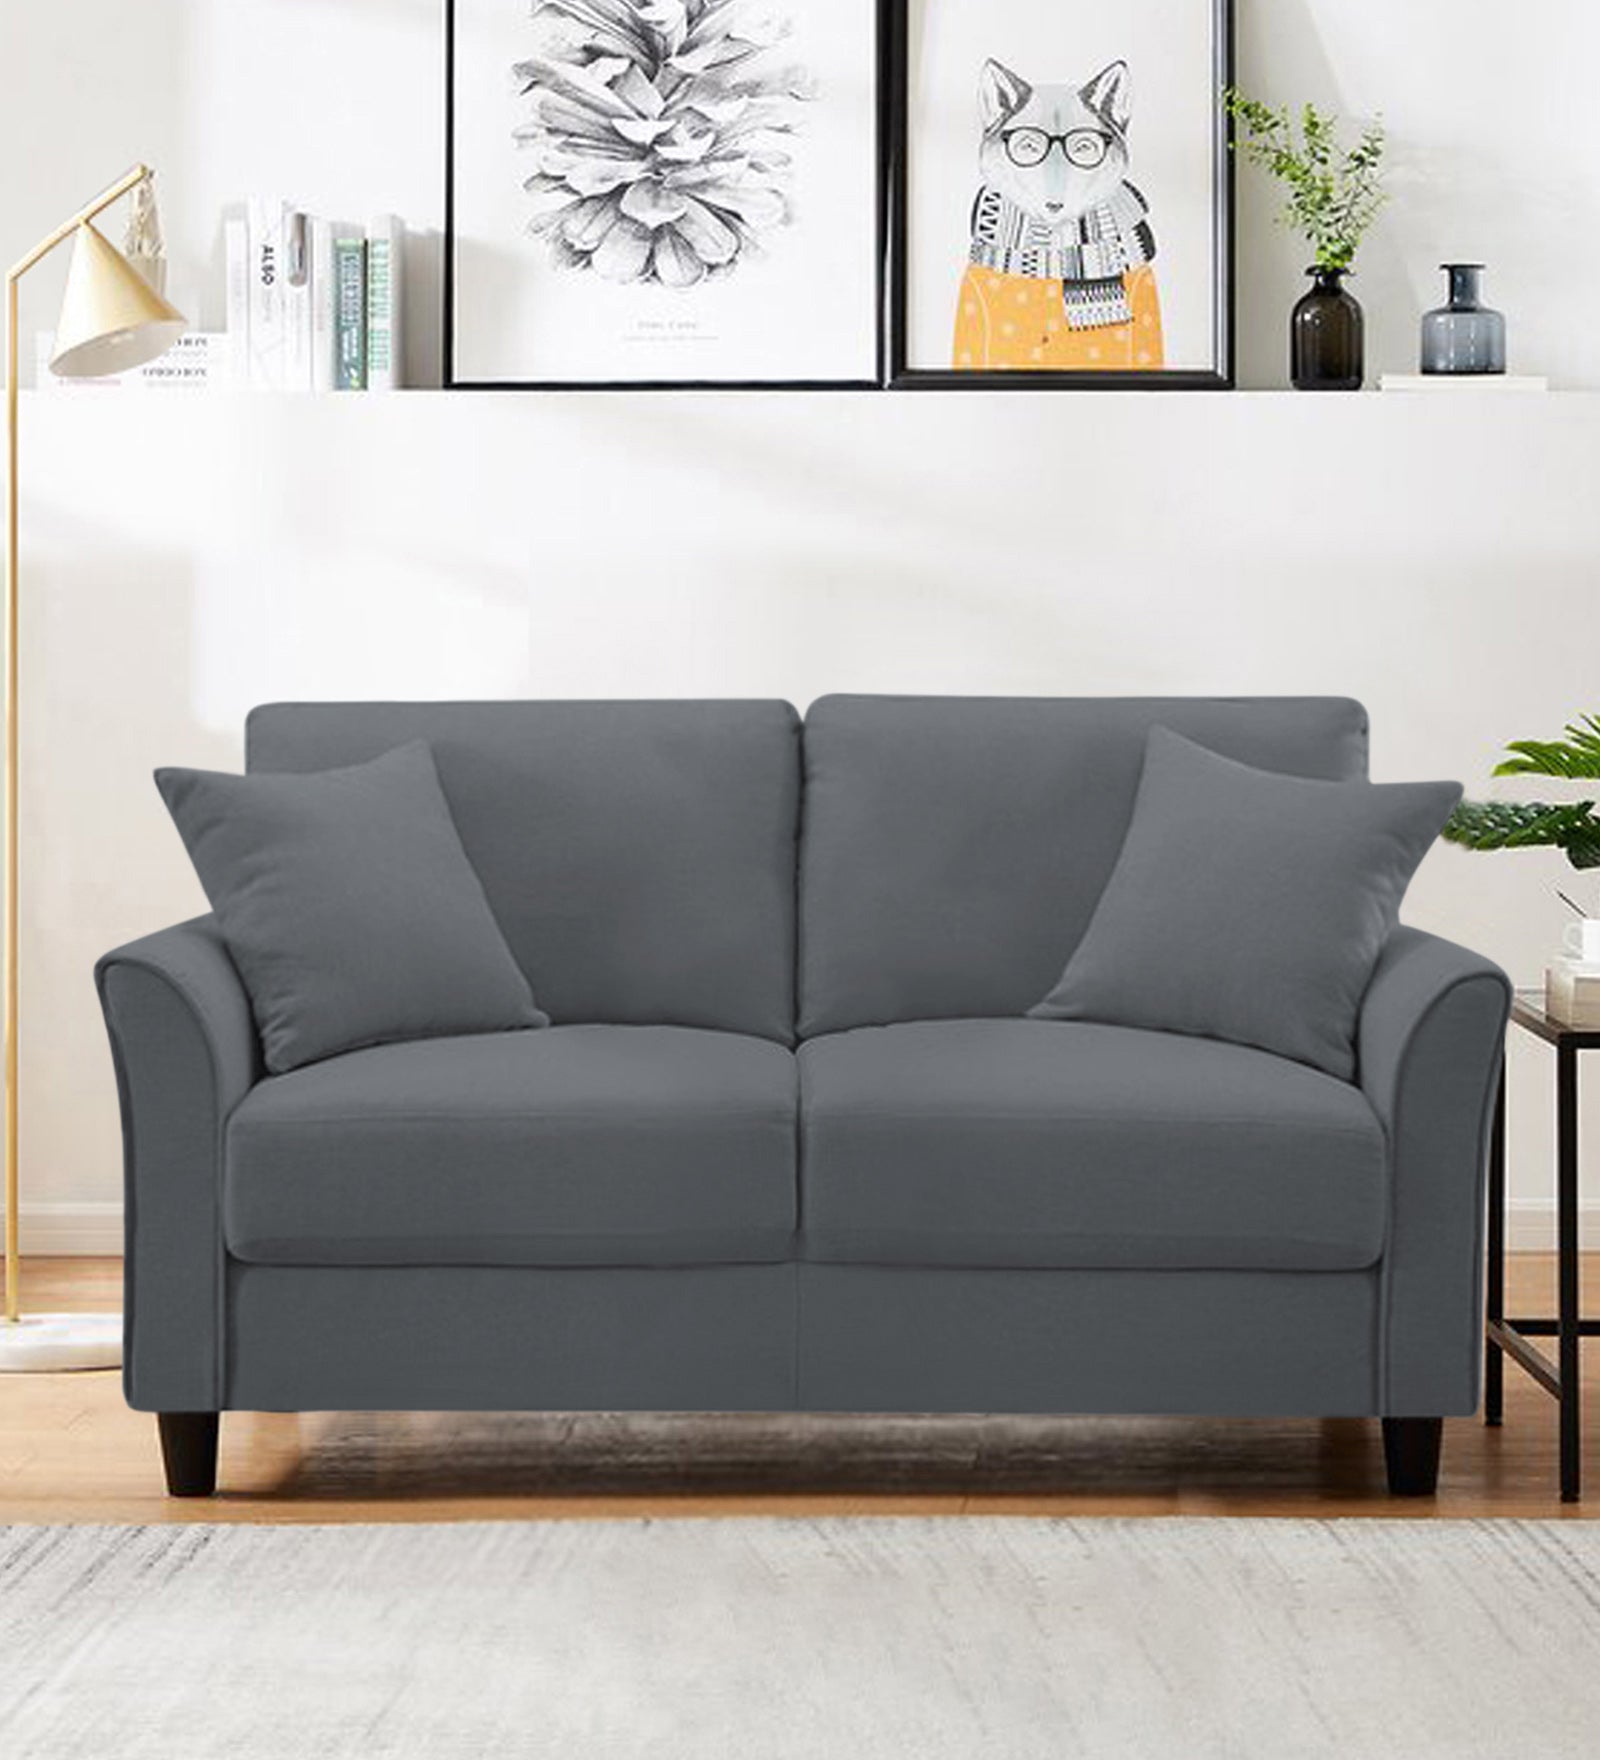 Daroo Velvet 2 Seater Sofa In Pubble Grey Colour